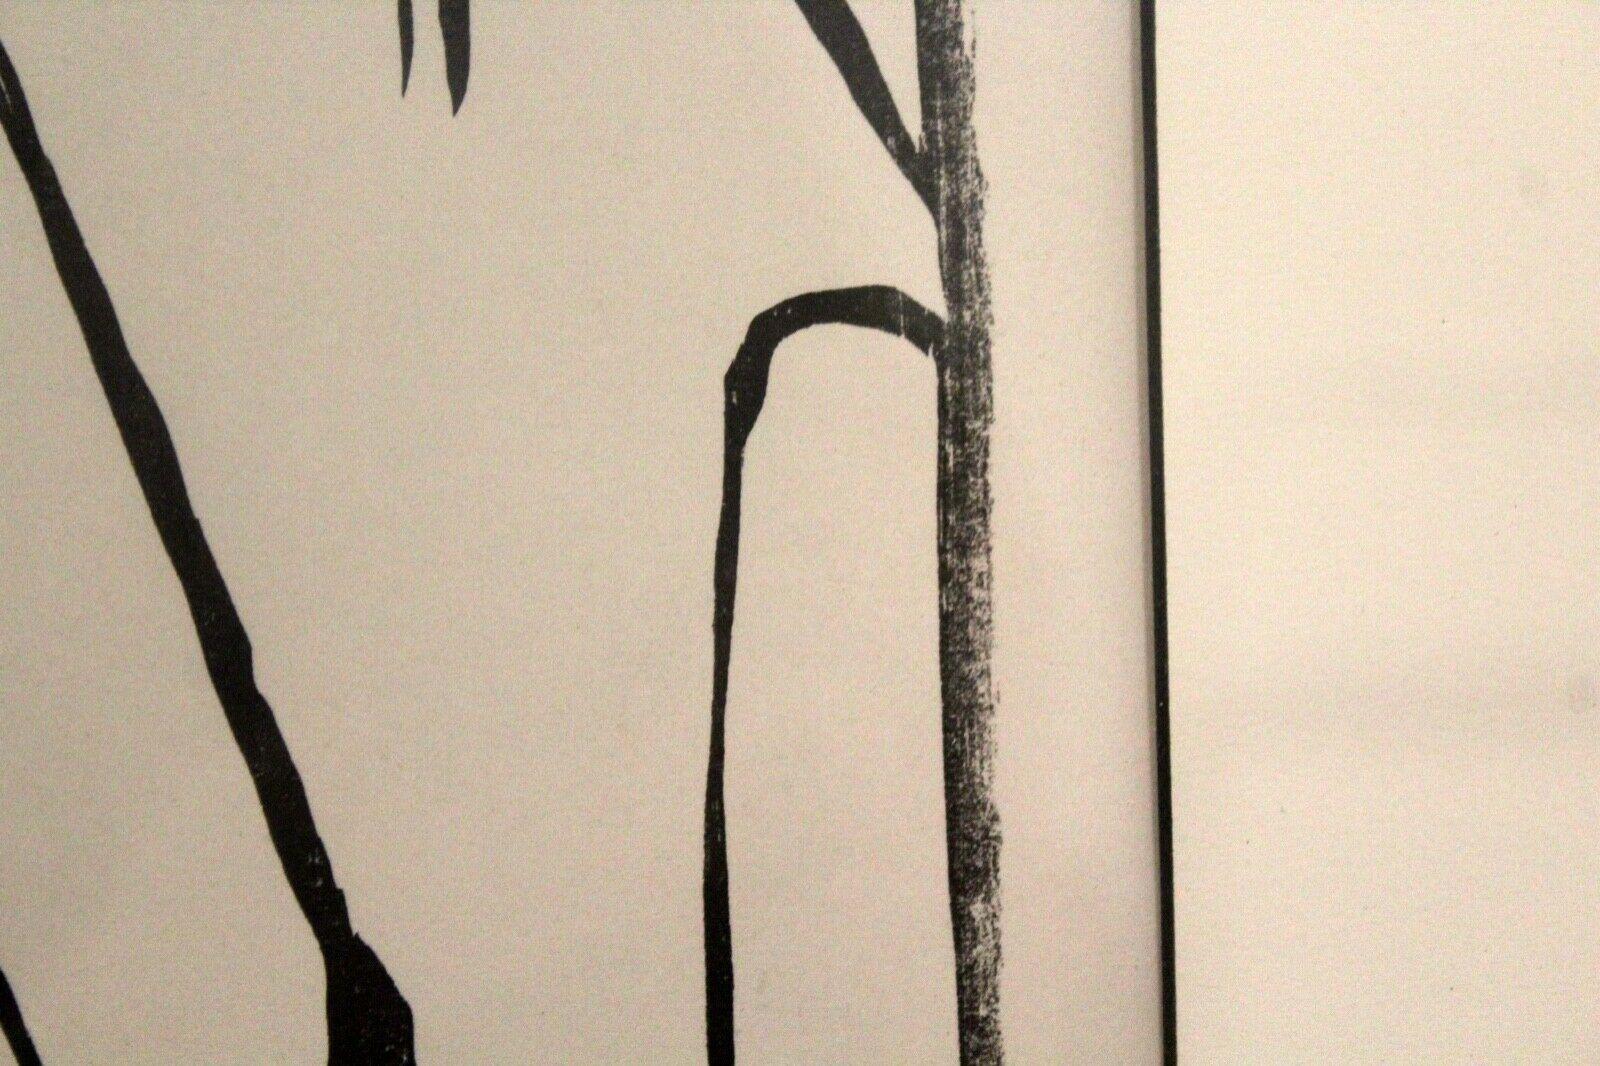 Leonard Baskin De Gheyn gravure sur bois moderne signée 4/50 encadrée 1970 en vente 1